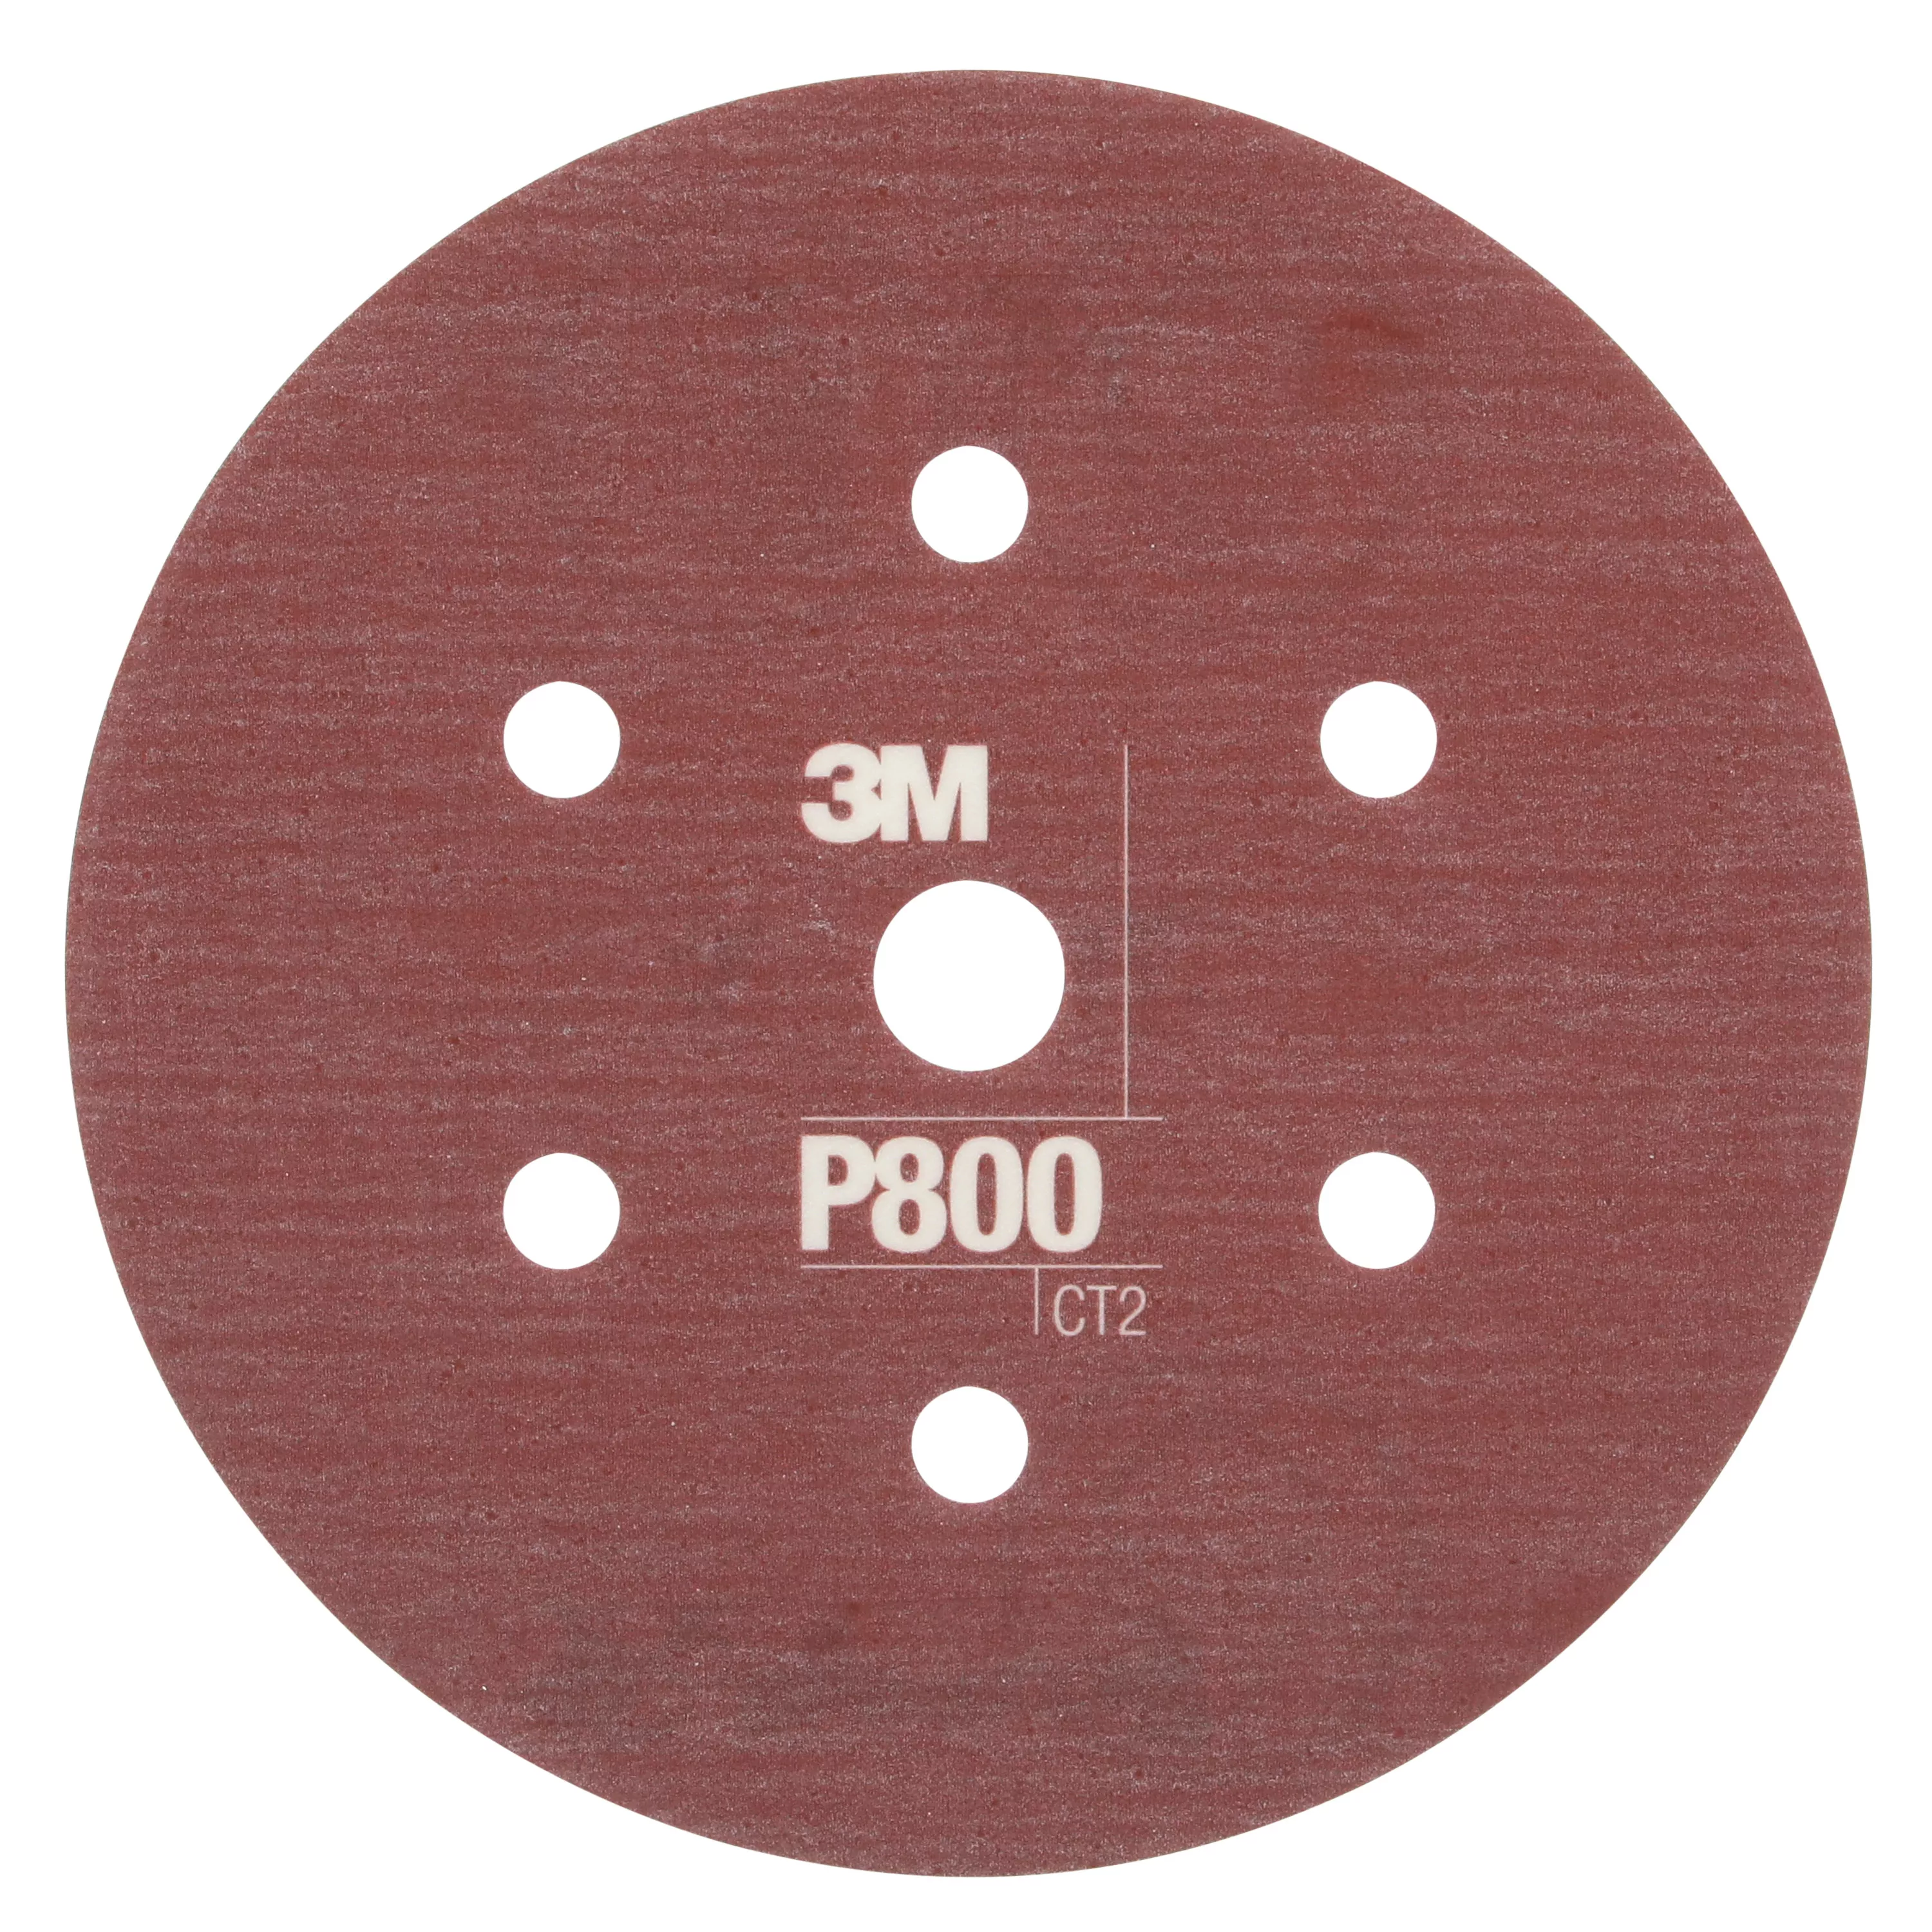 SKU 7000120195 | 3M™ Hookit™ Flexible Abrasive Disc 270J